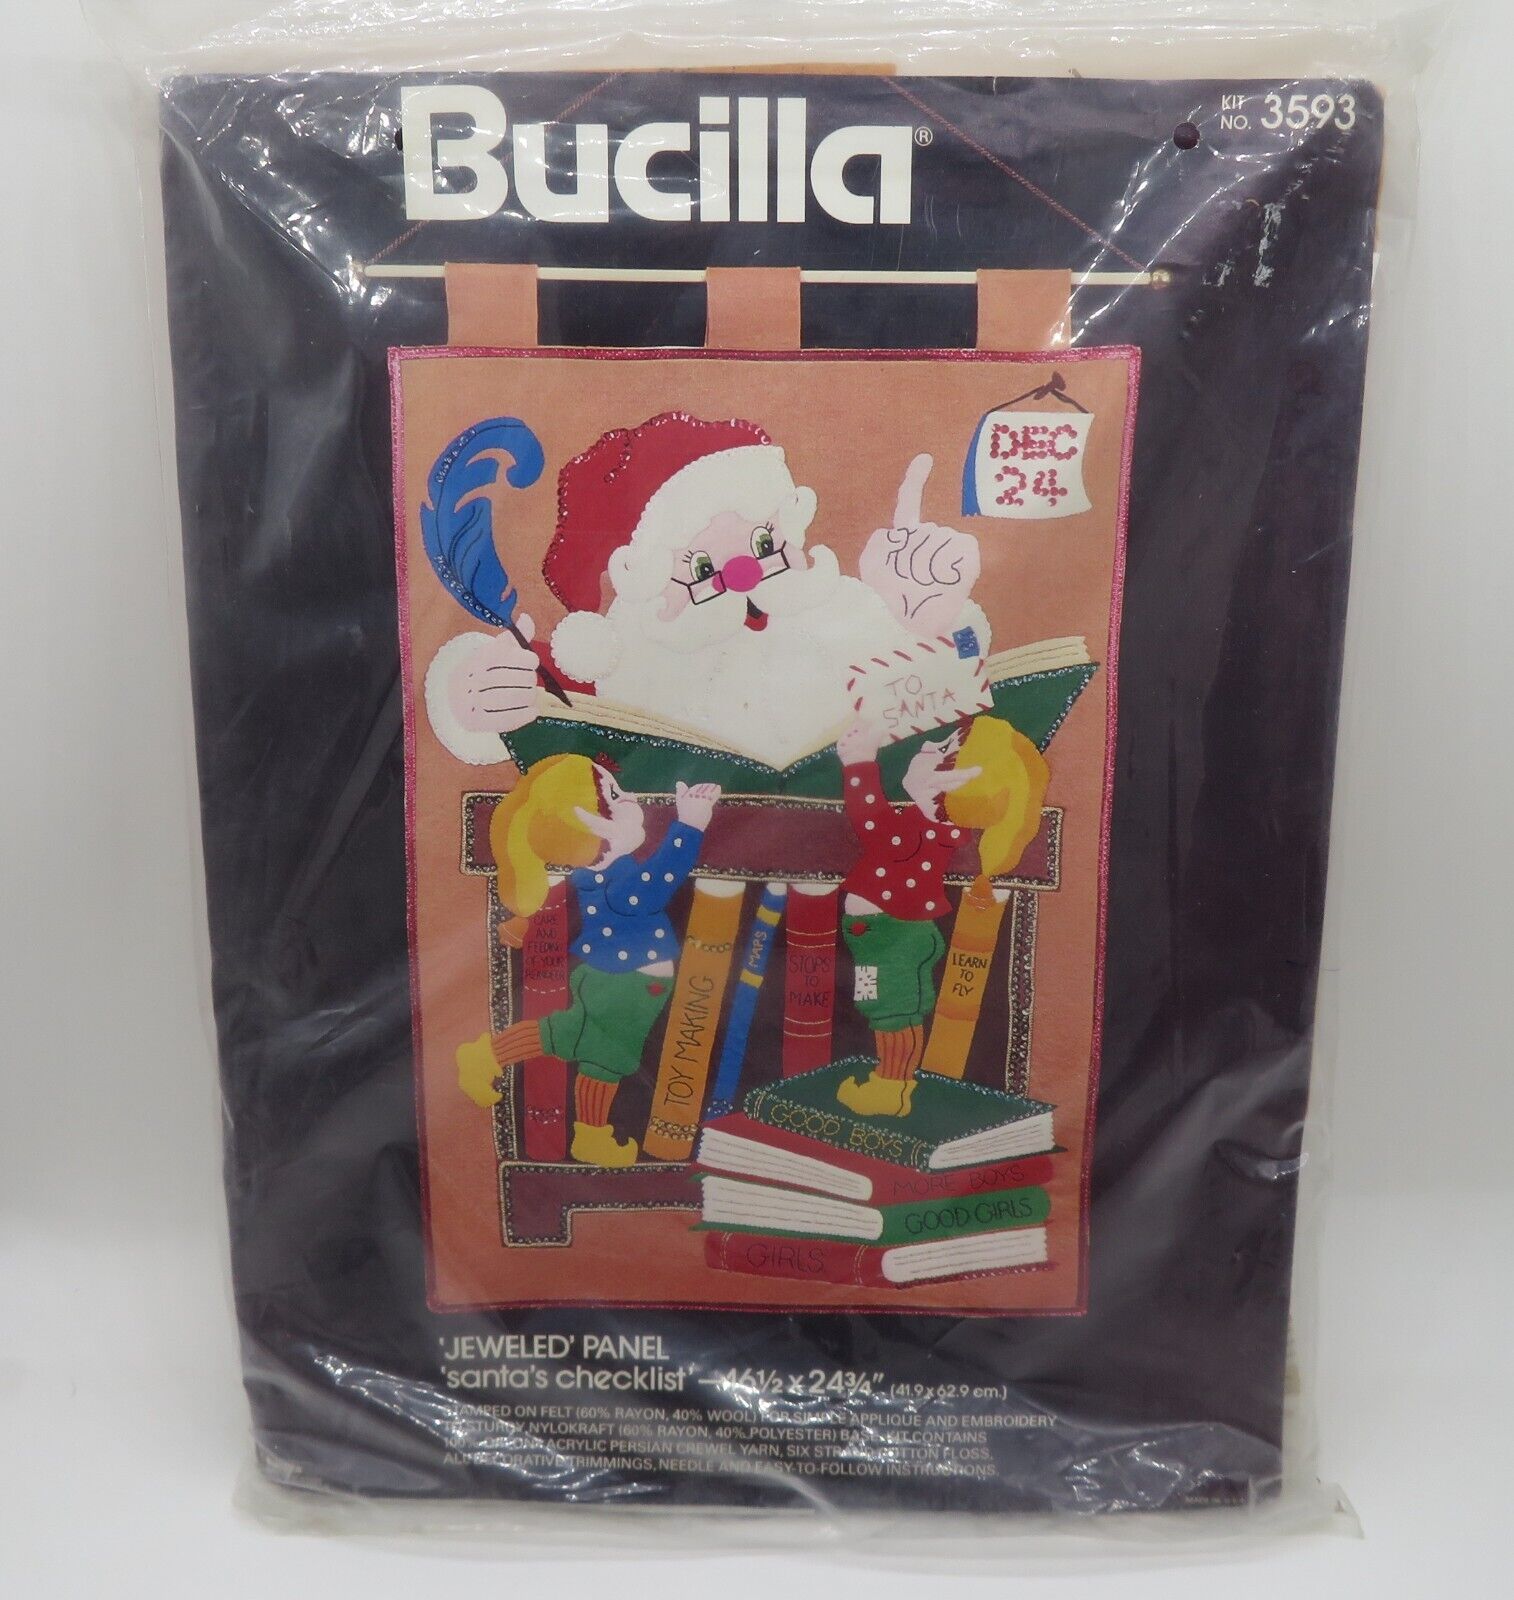 Bucilla Santa's Checklist Jeweled Felt Craft Kit #3593 Sealed